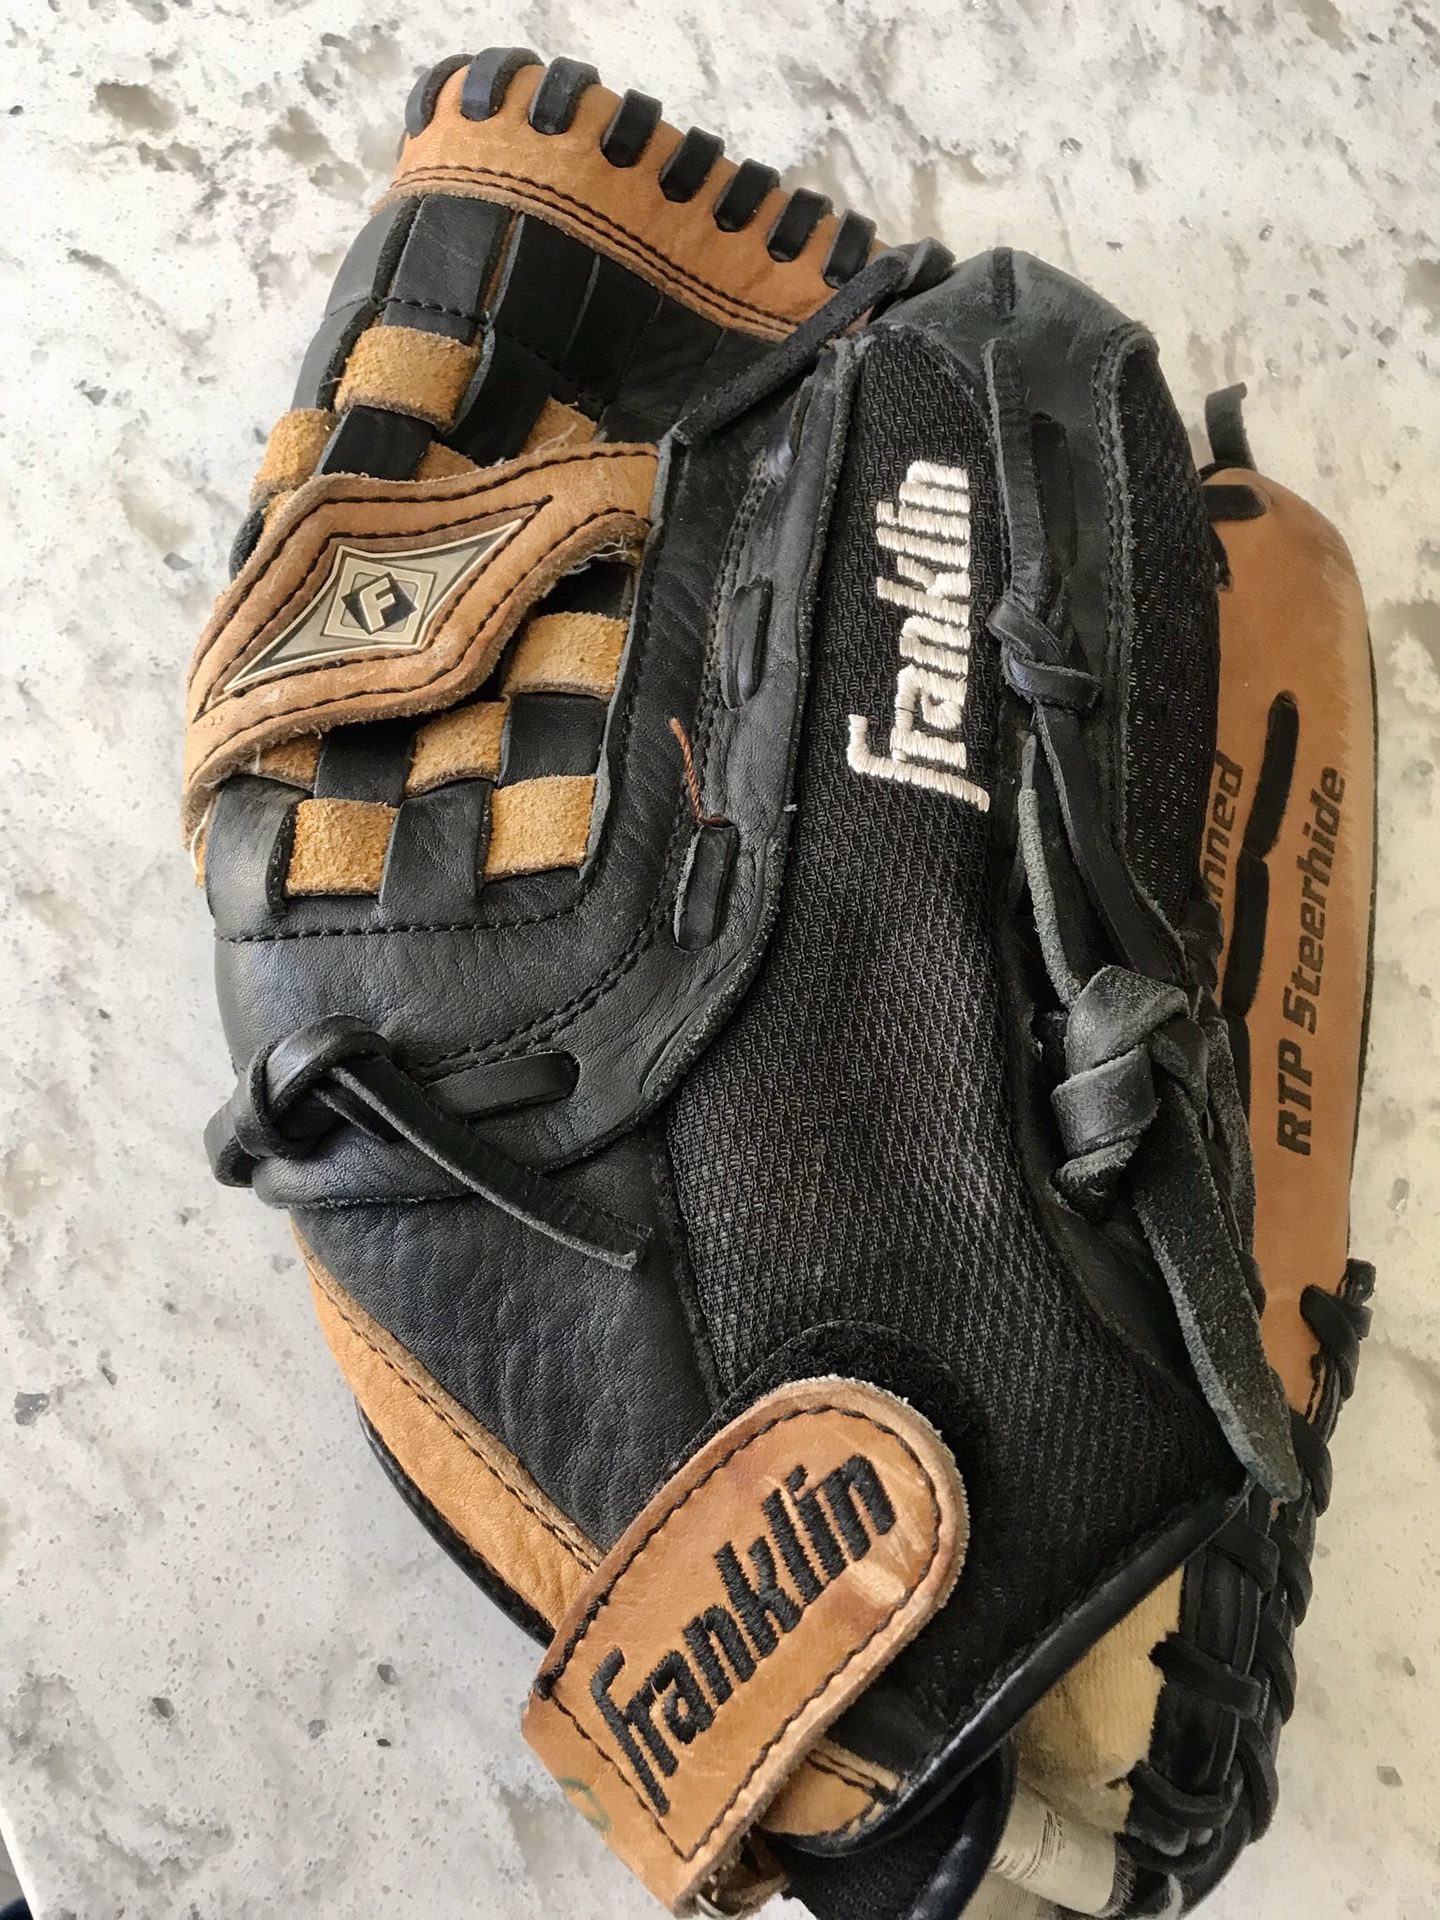 Franklin softball/baseball glove